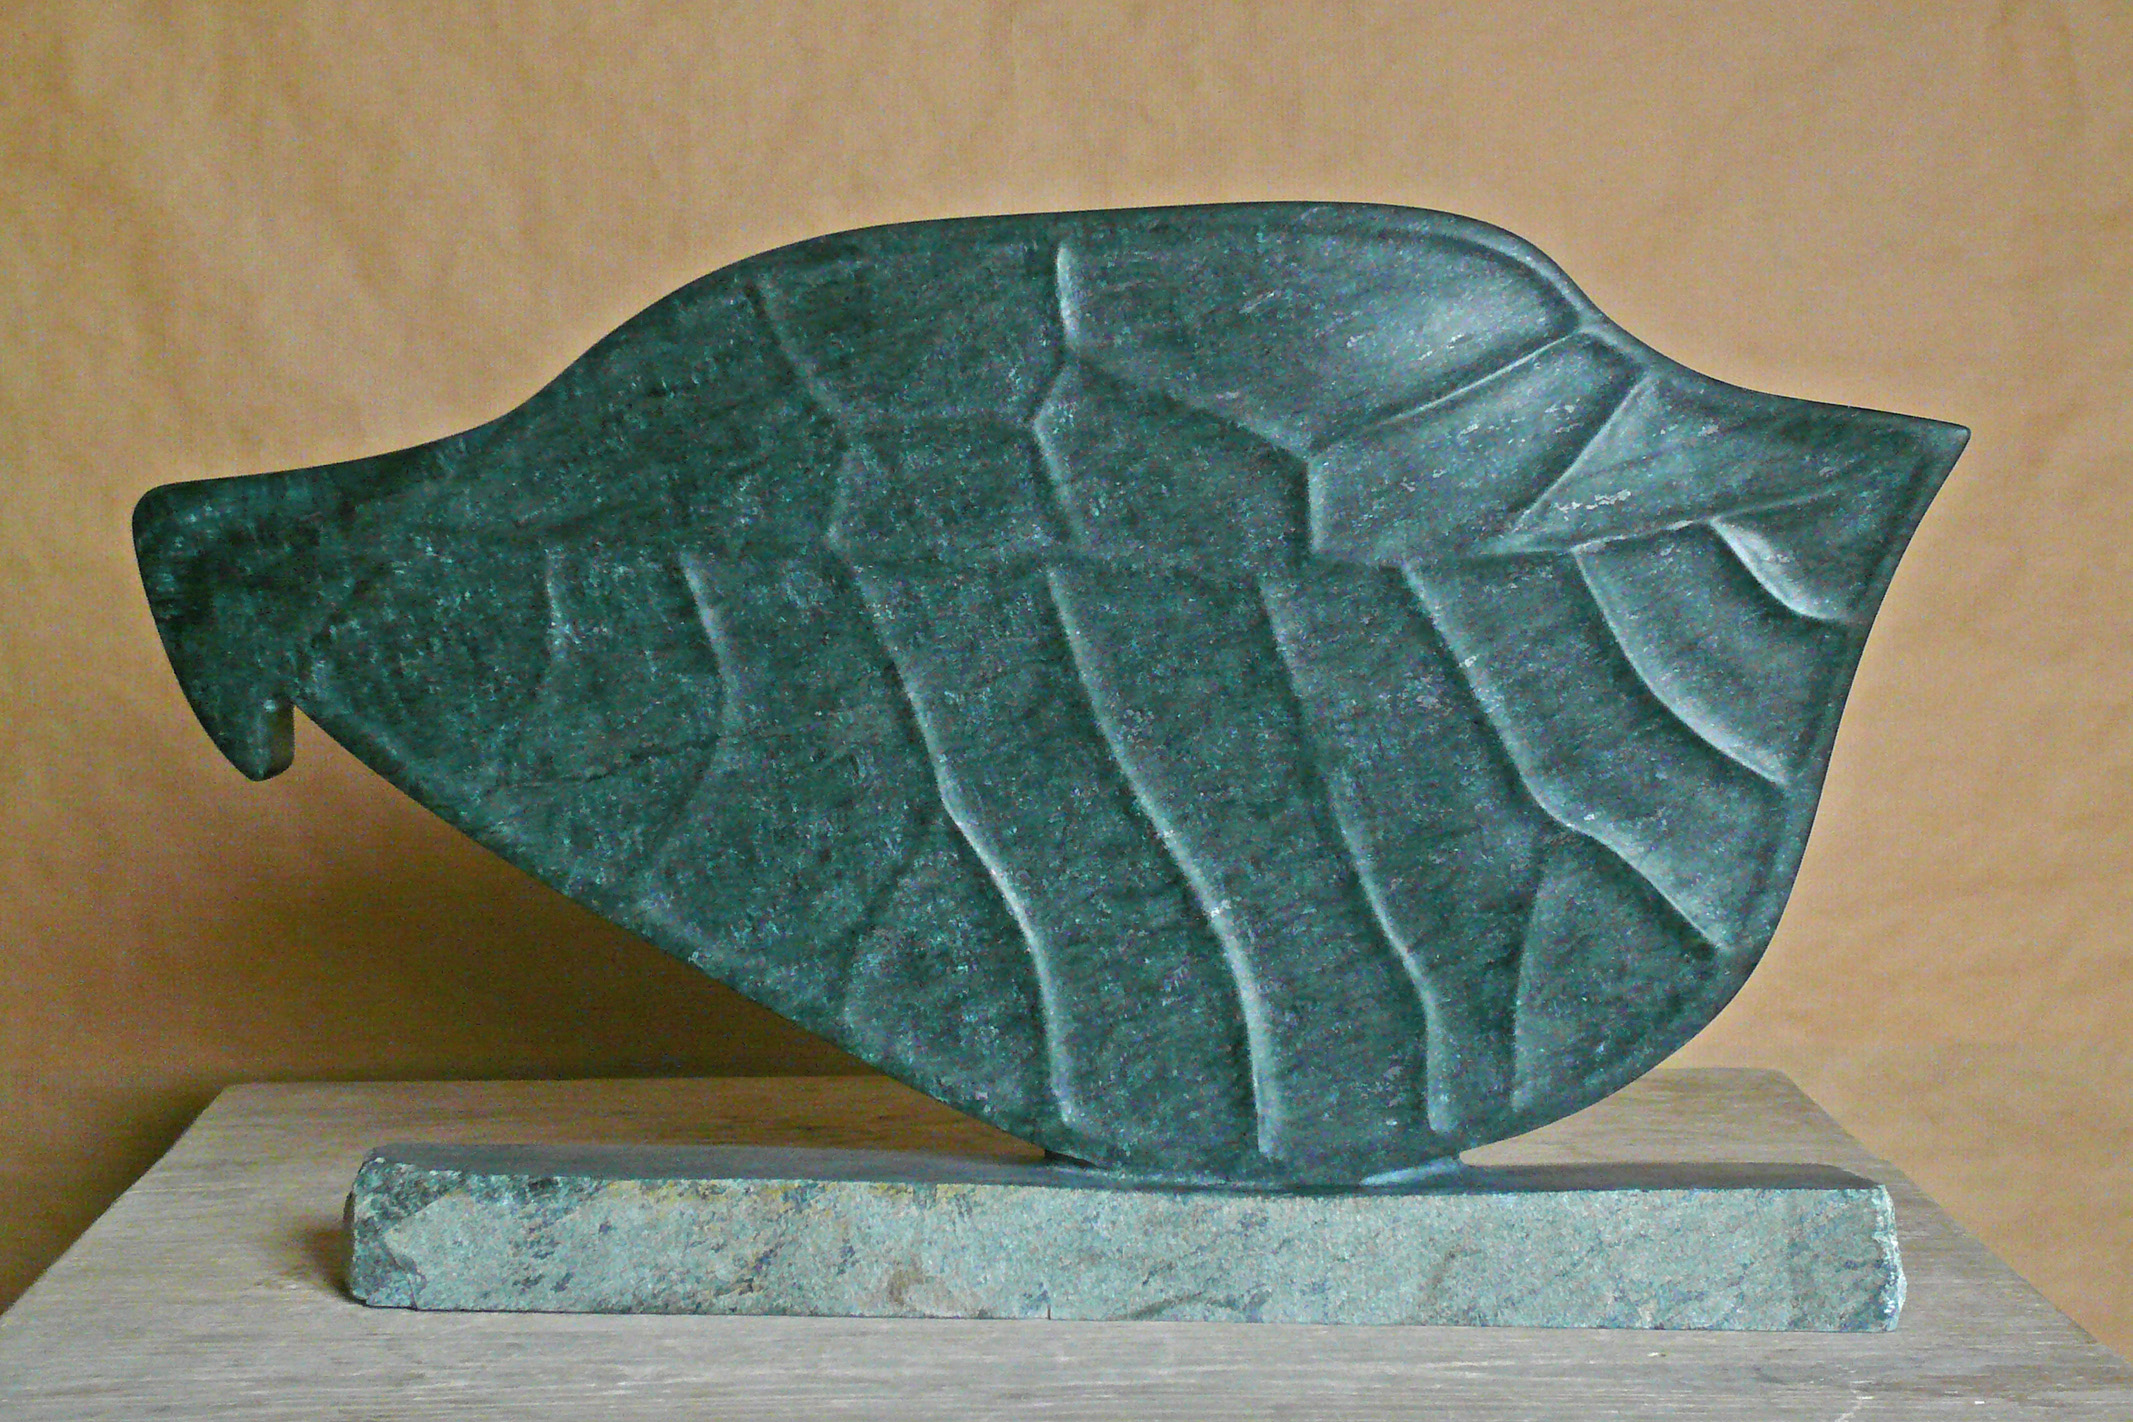 26 Othoptère, 2009, serpentine monolithe,L 53 cm